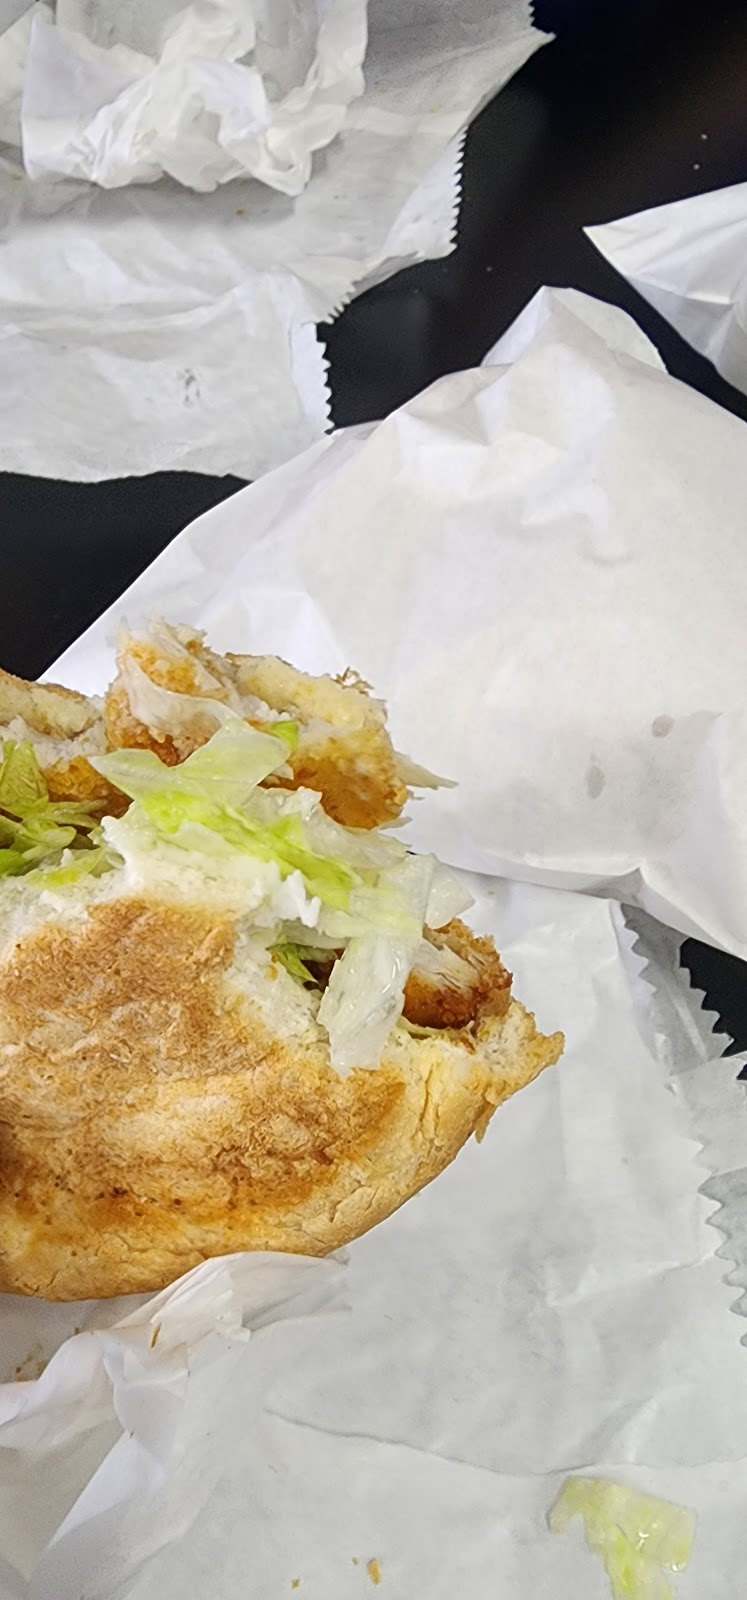 Dirty Fries | meal takeaway | 28 Queen St, Lake Illawarra NSW 2528, Australia | 0480368703 OR +61 480 368 703